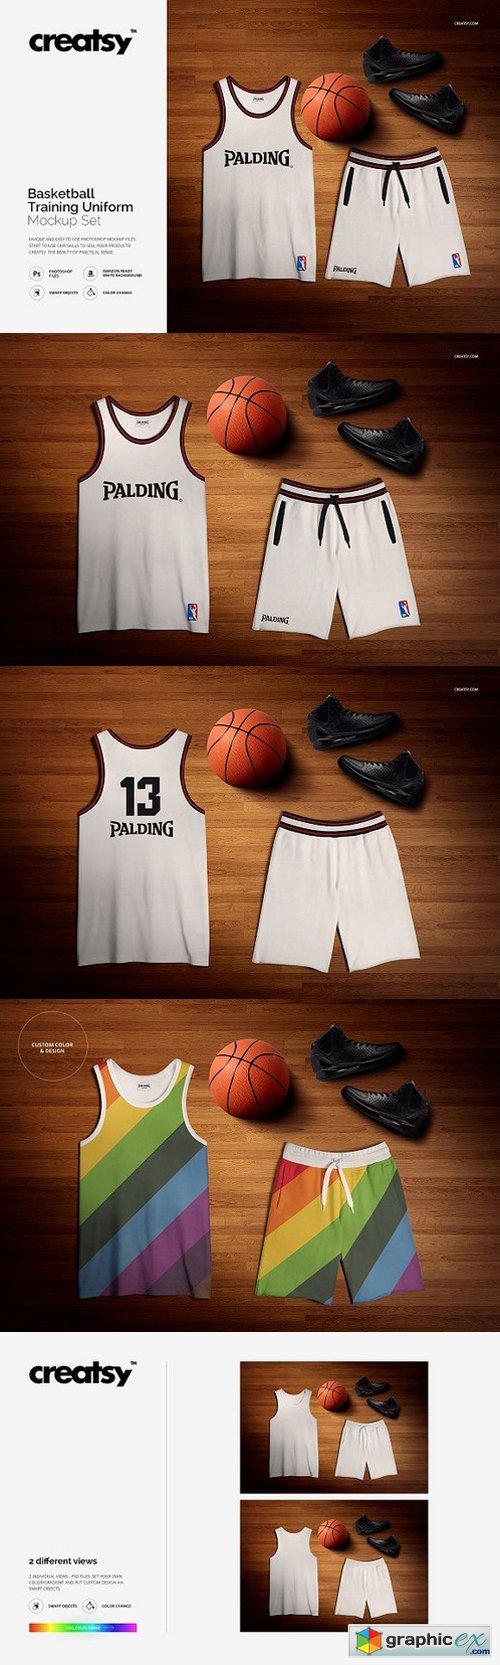 Basketball Training Uniform Mockup